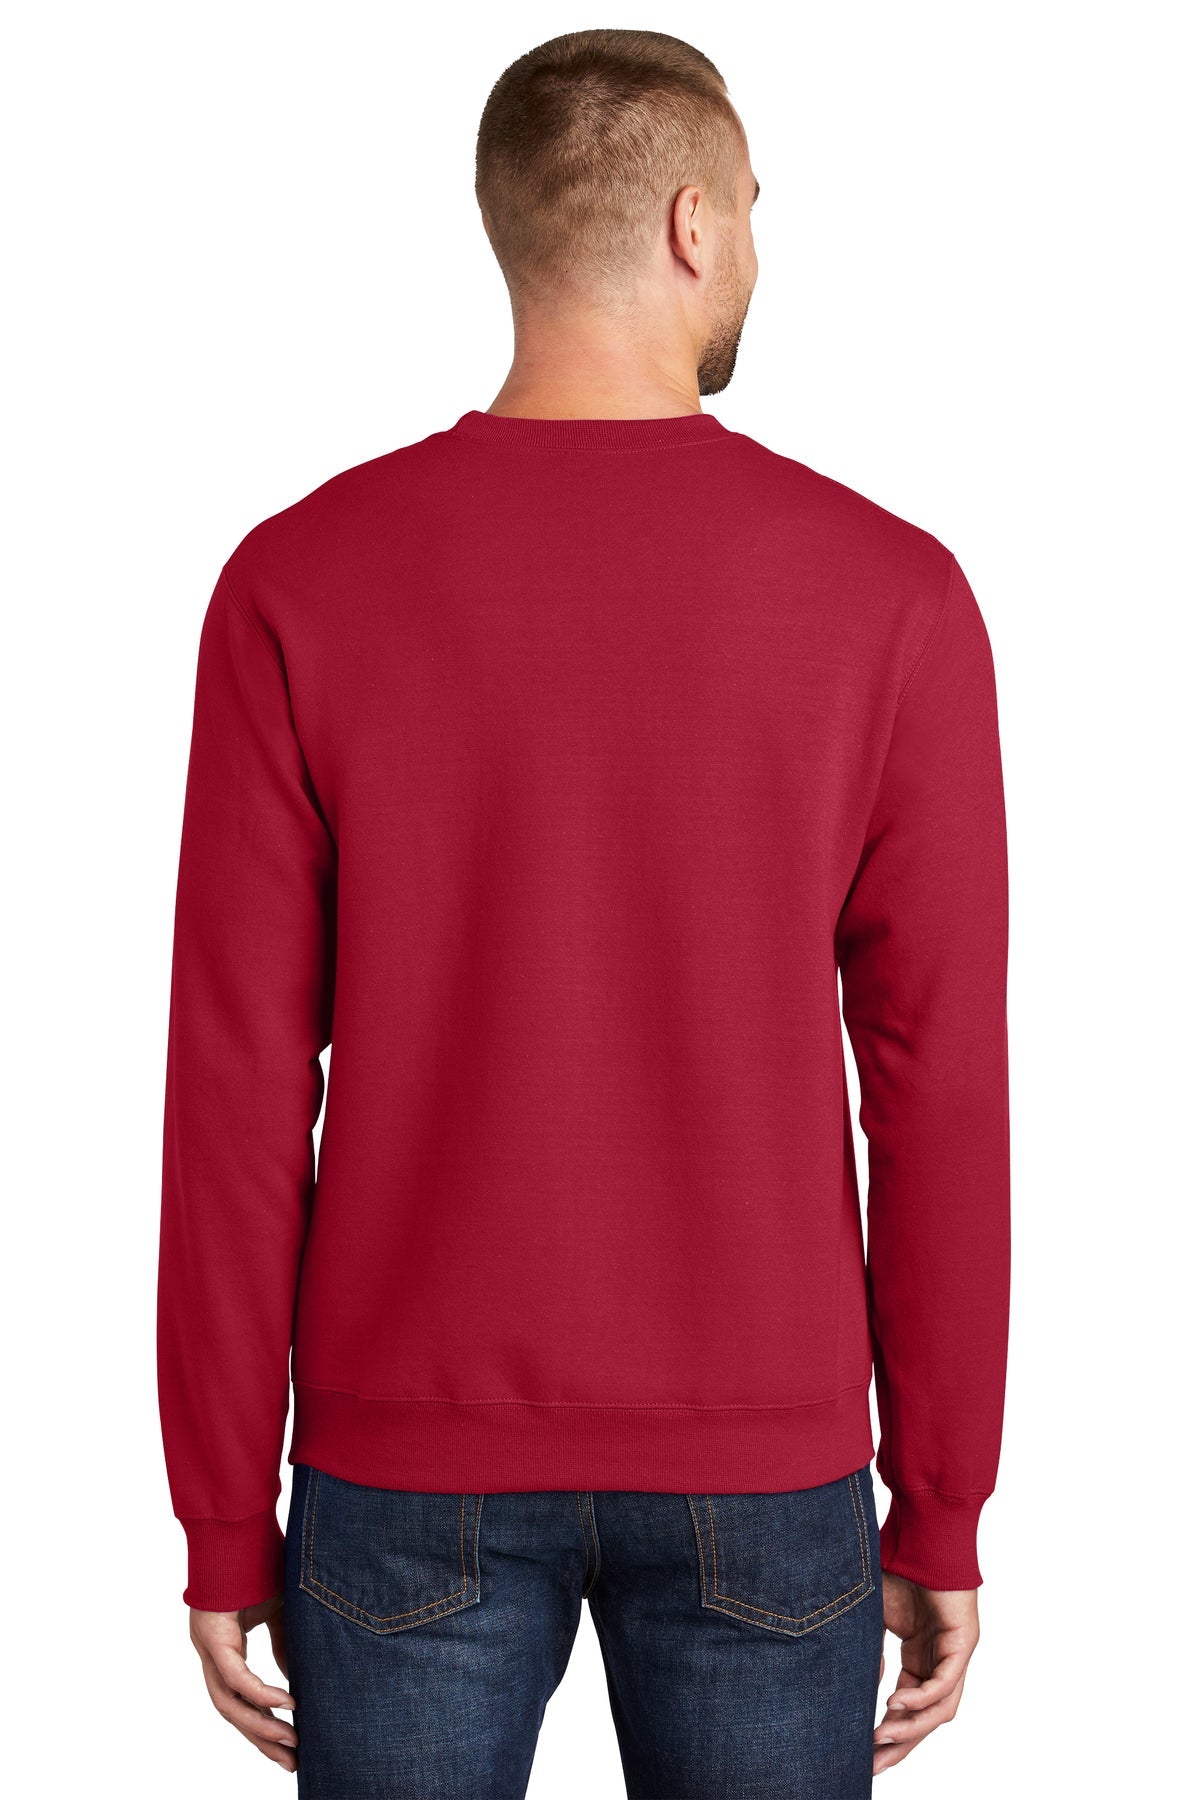 port & company_pc90 _red_company_logo_sweatshirts